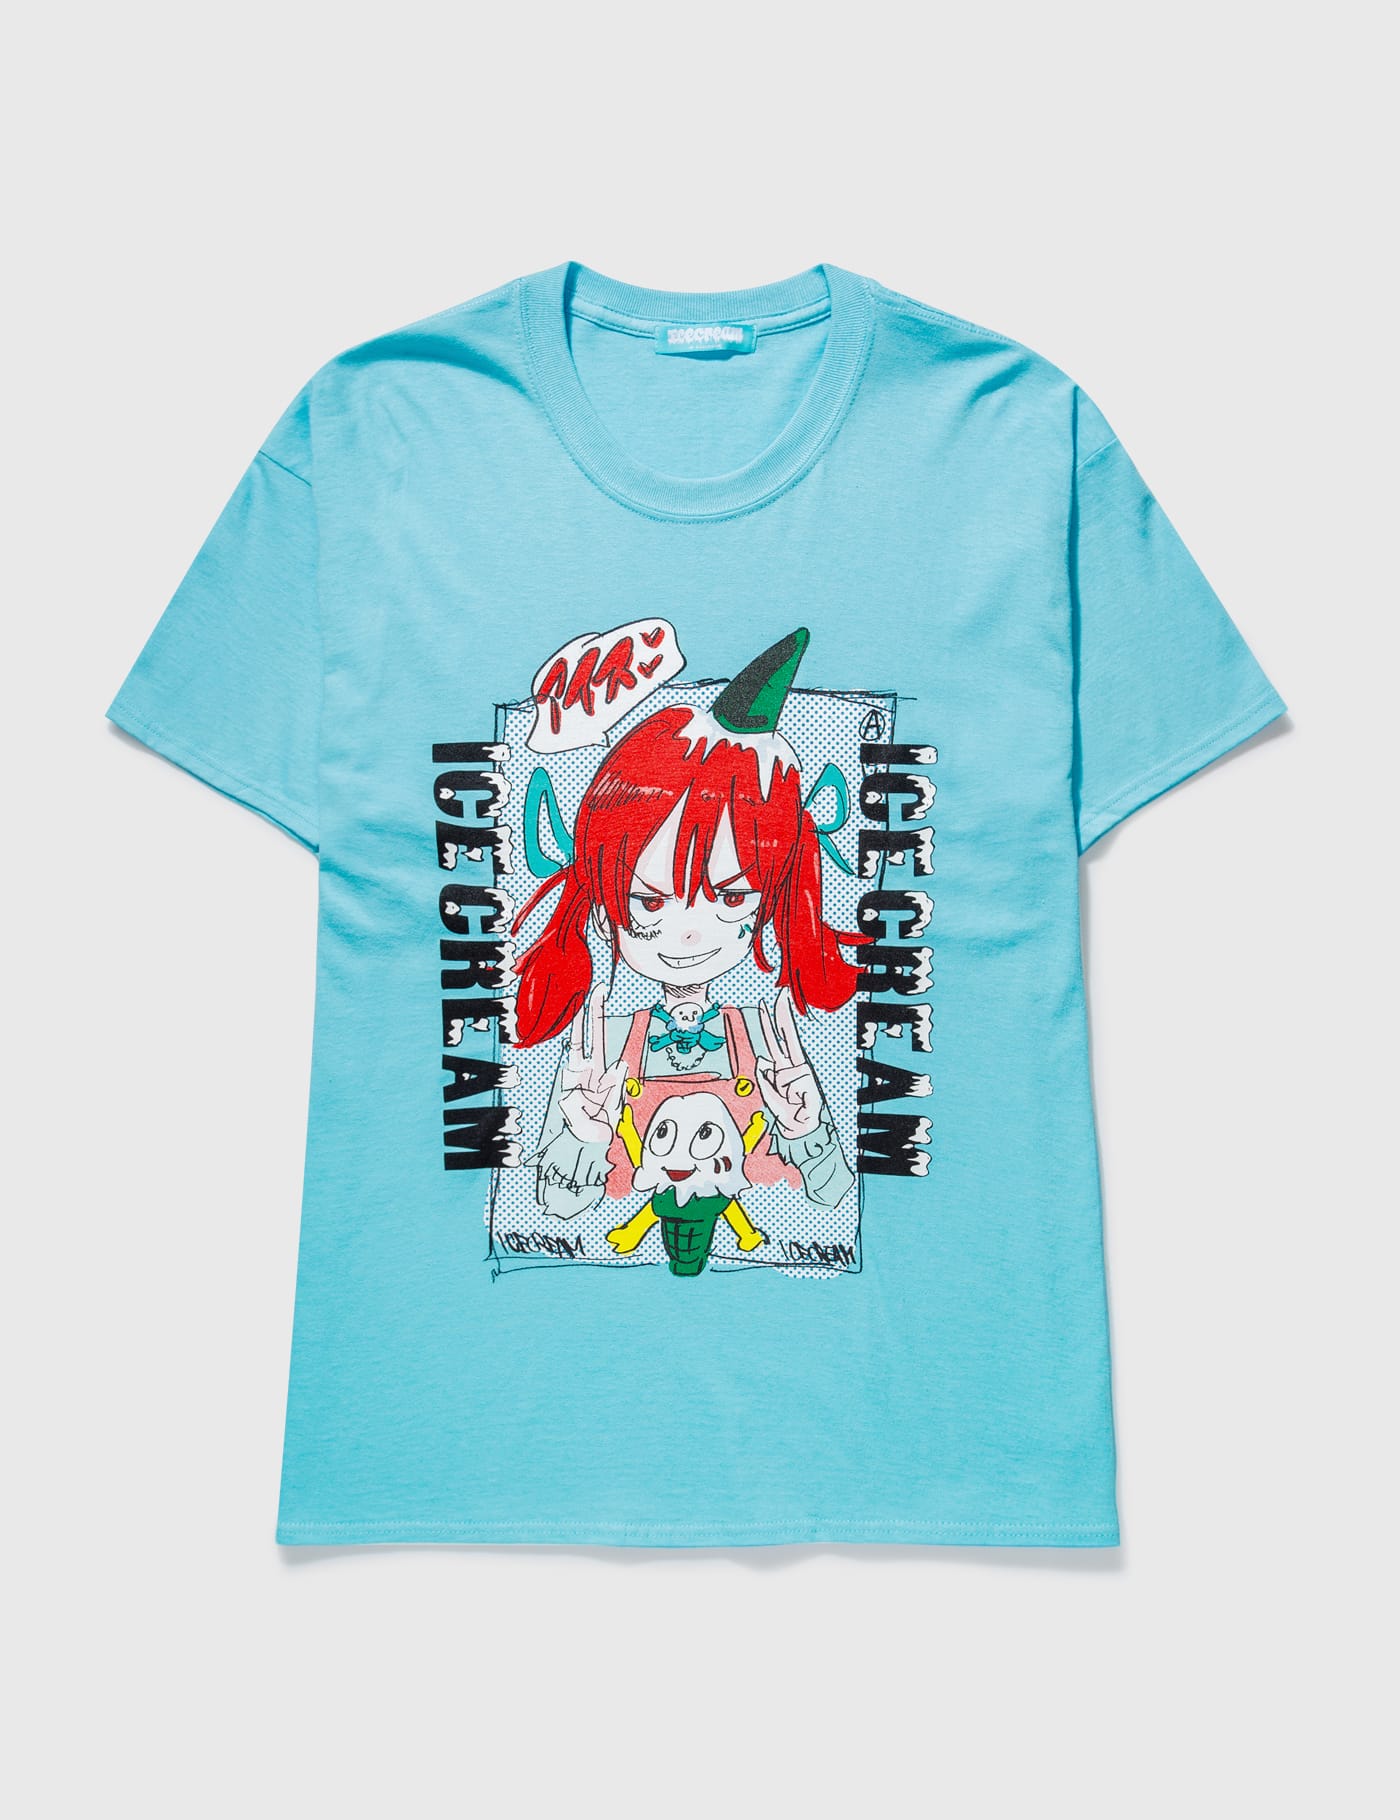 Icecream - Icecream X Jun Inagawa Girl T-shirt | HBX -  ハイプビースト(Hypebeast)が厳選したグローバルファッション&ライフスタイル